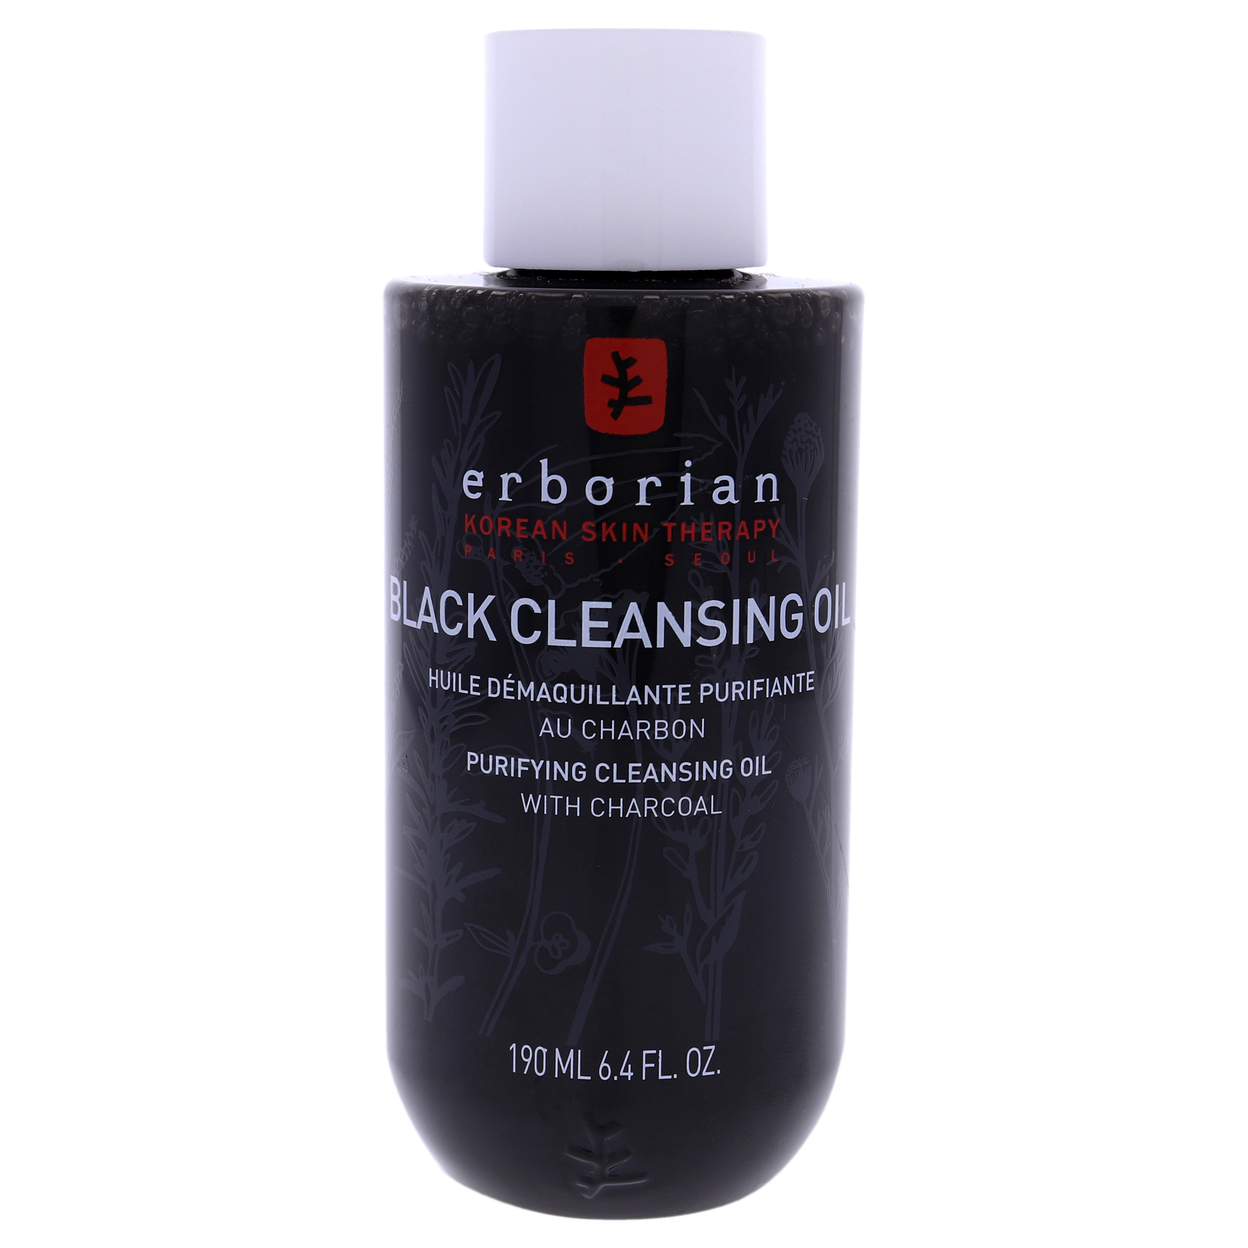 Erborian Black Cleansing Oil Cleanser 6.4 Oz